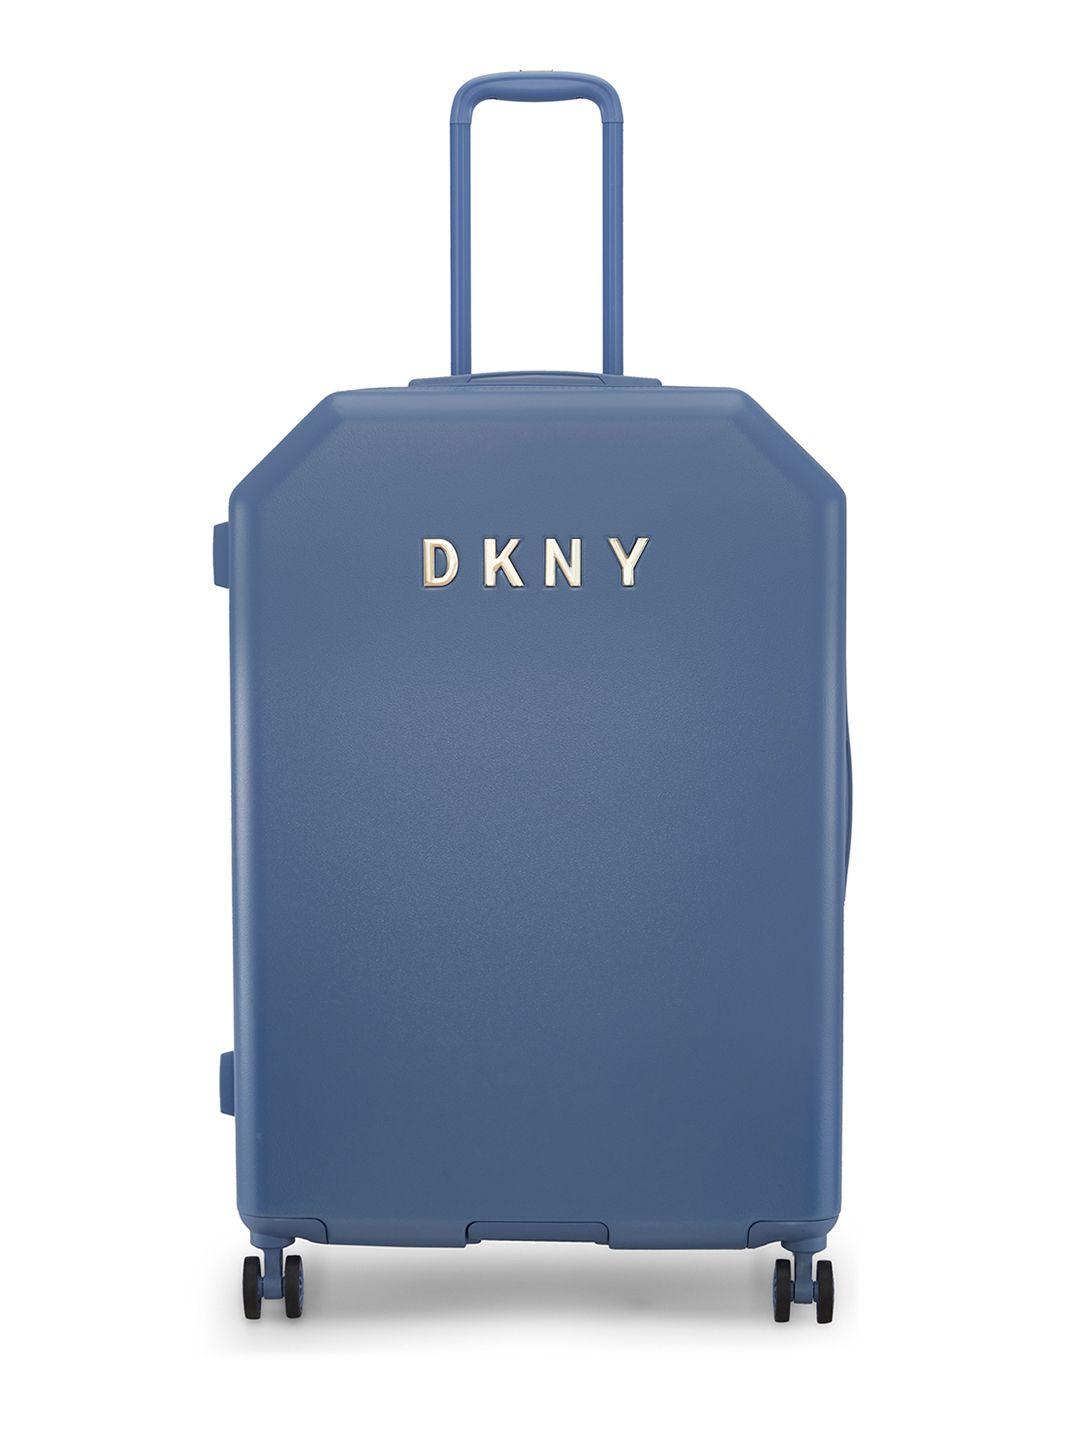 dkny allure hard-sided large trolley bag- 71.12cm